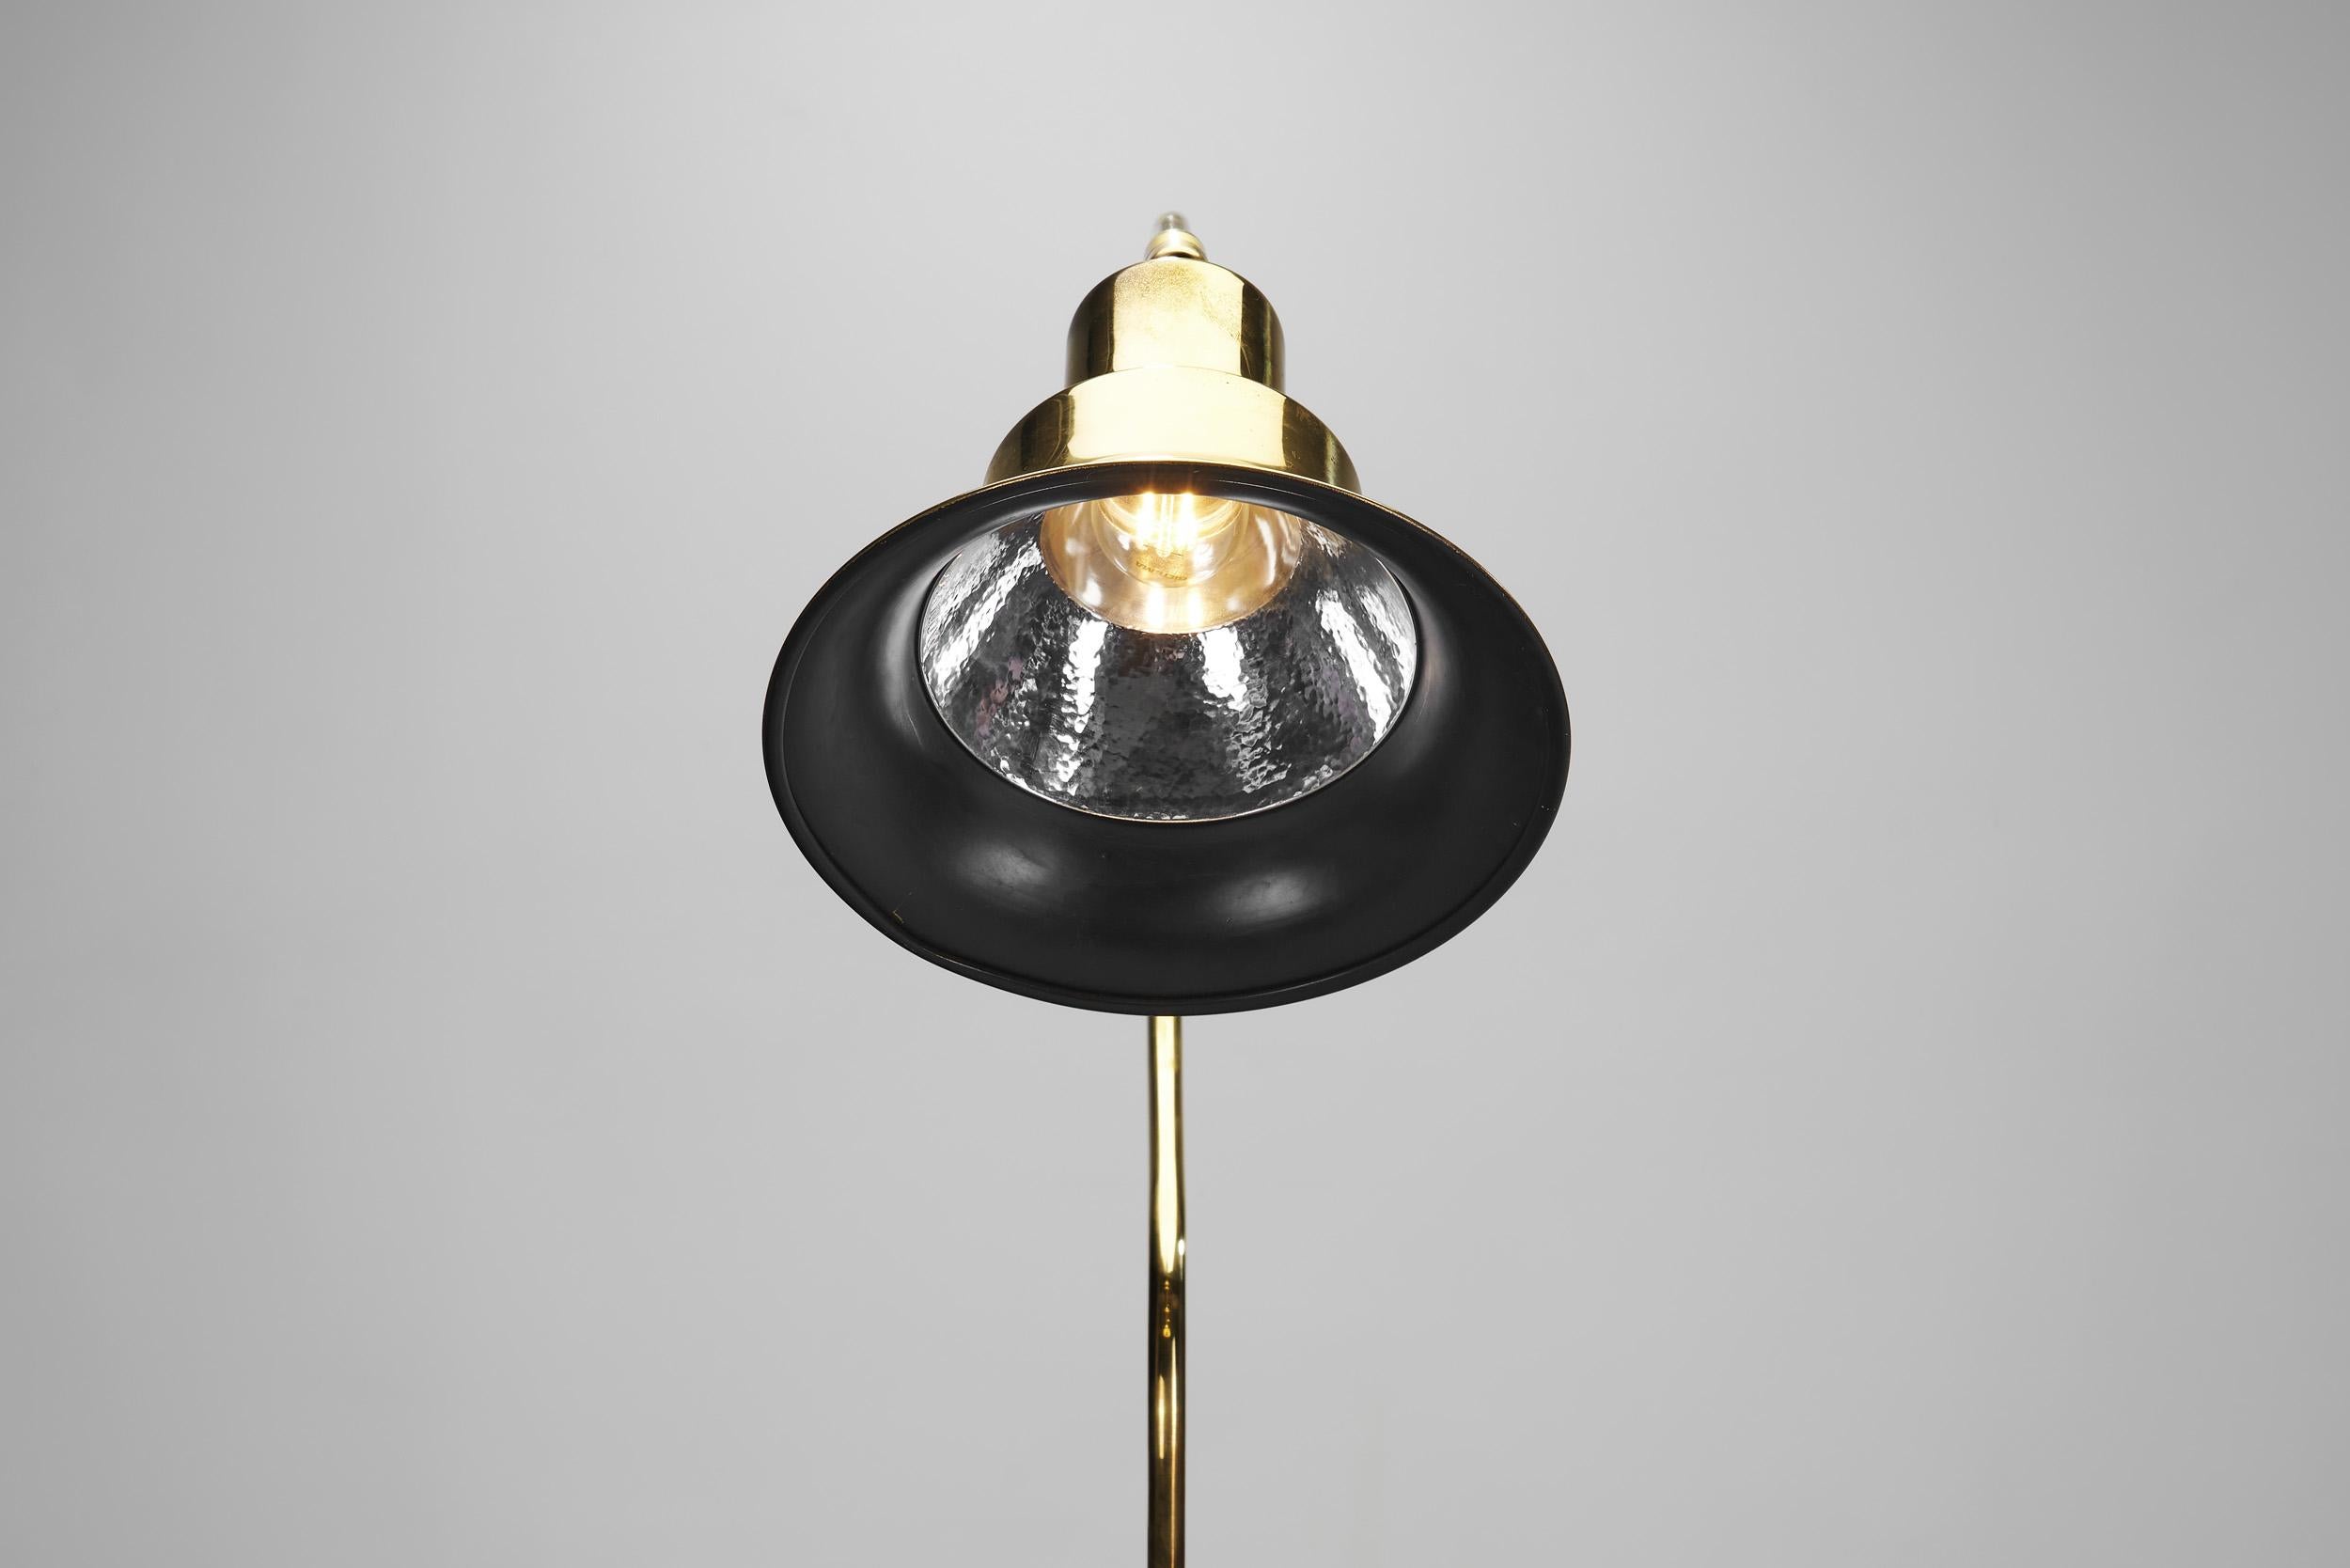 Jan Wickelgren Curved Brass Floor Lamp for Aneta Belysning AB, Sweden 1970s For Sale 1